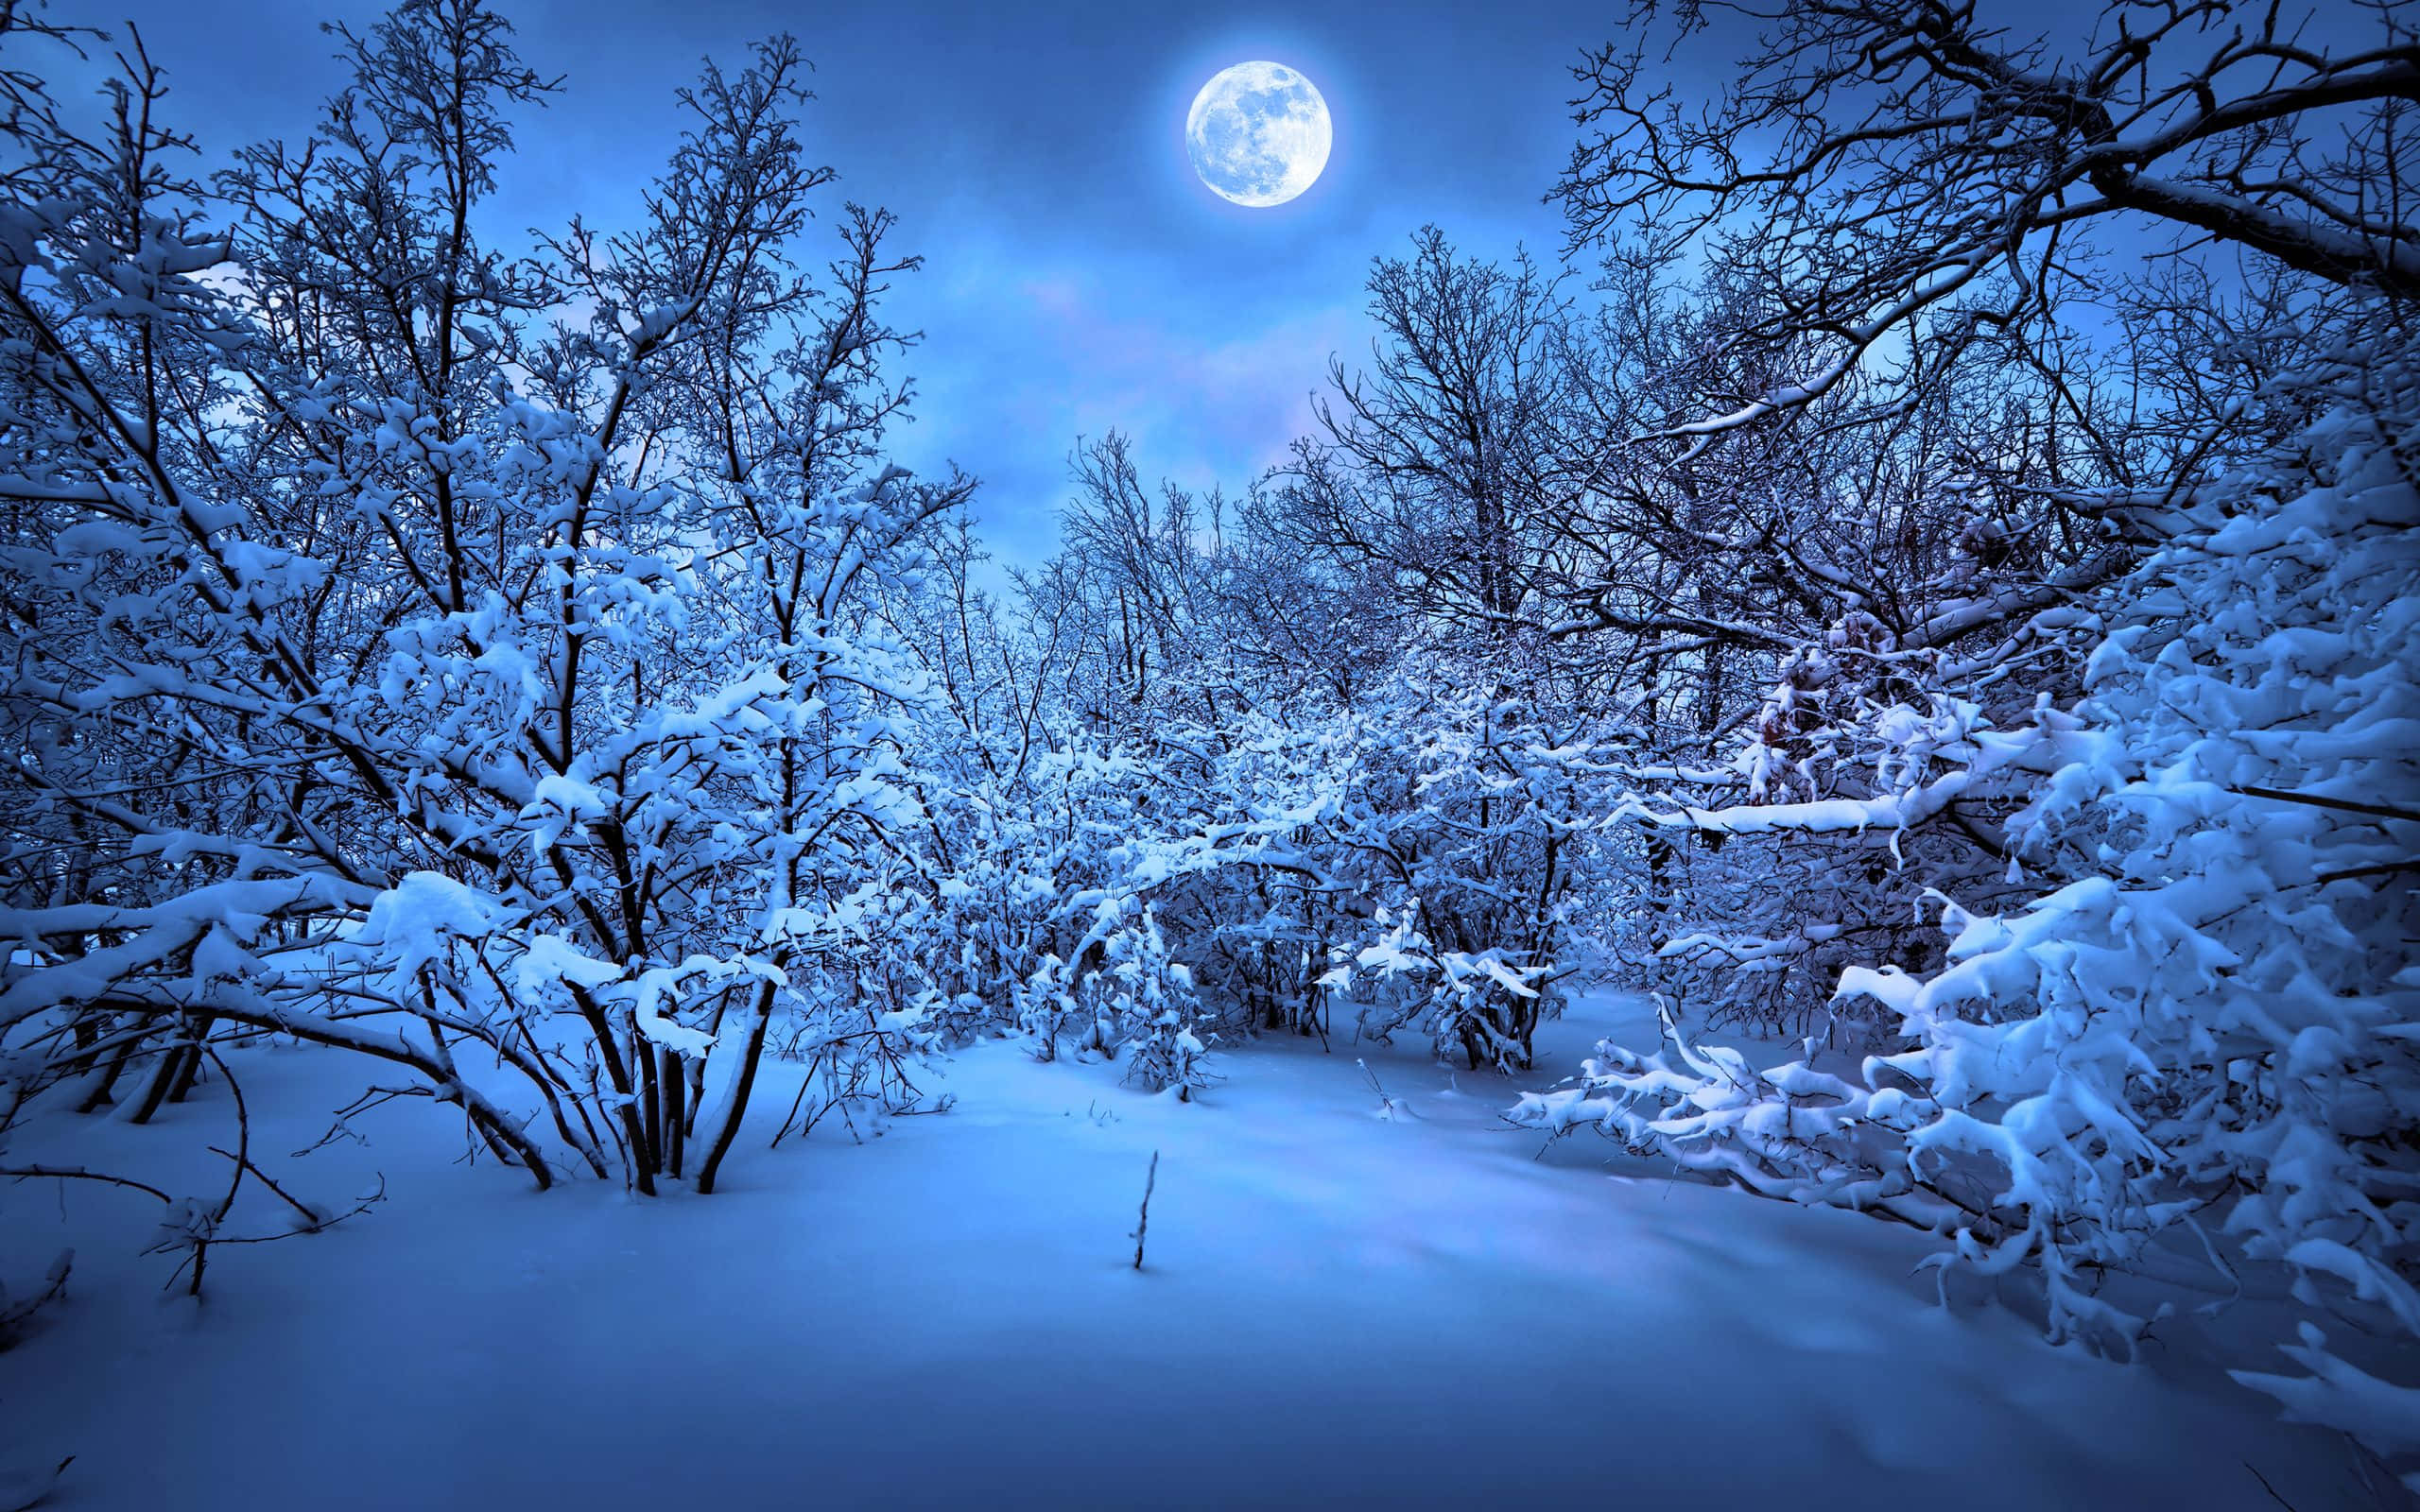 "Beautiful High Resolution Snow Scene"